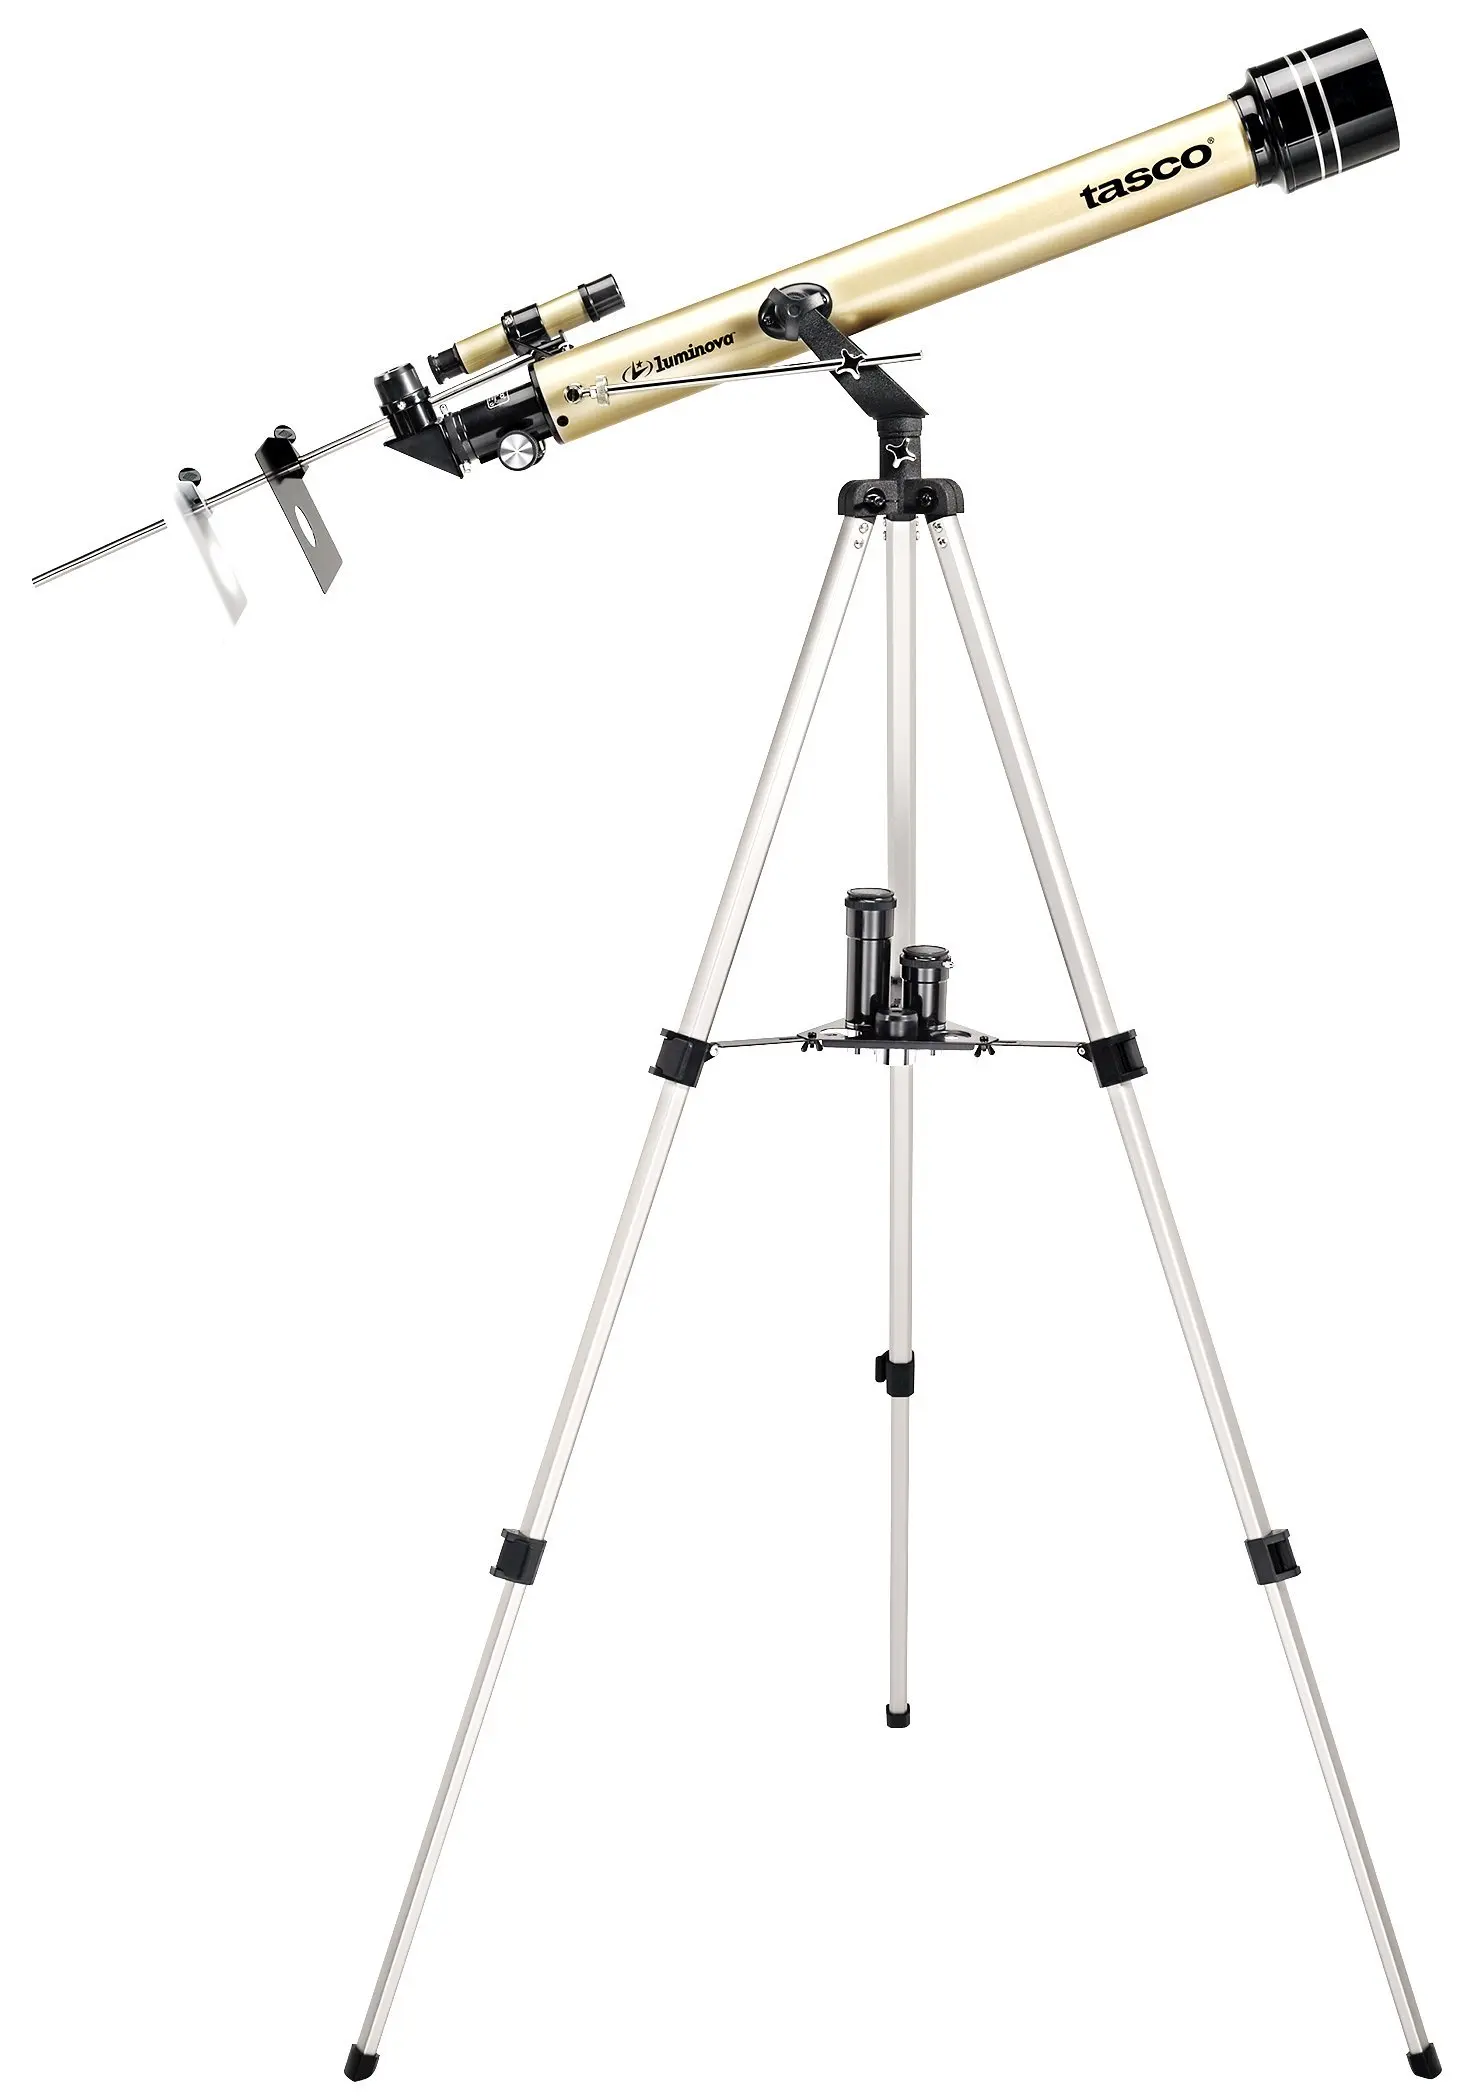 Buy Tasco Luminova 420x76mm Reflector Telescope in Cheap Price on Tasco 800mm X 60mm Luminova Telescope